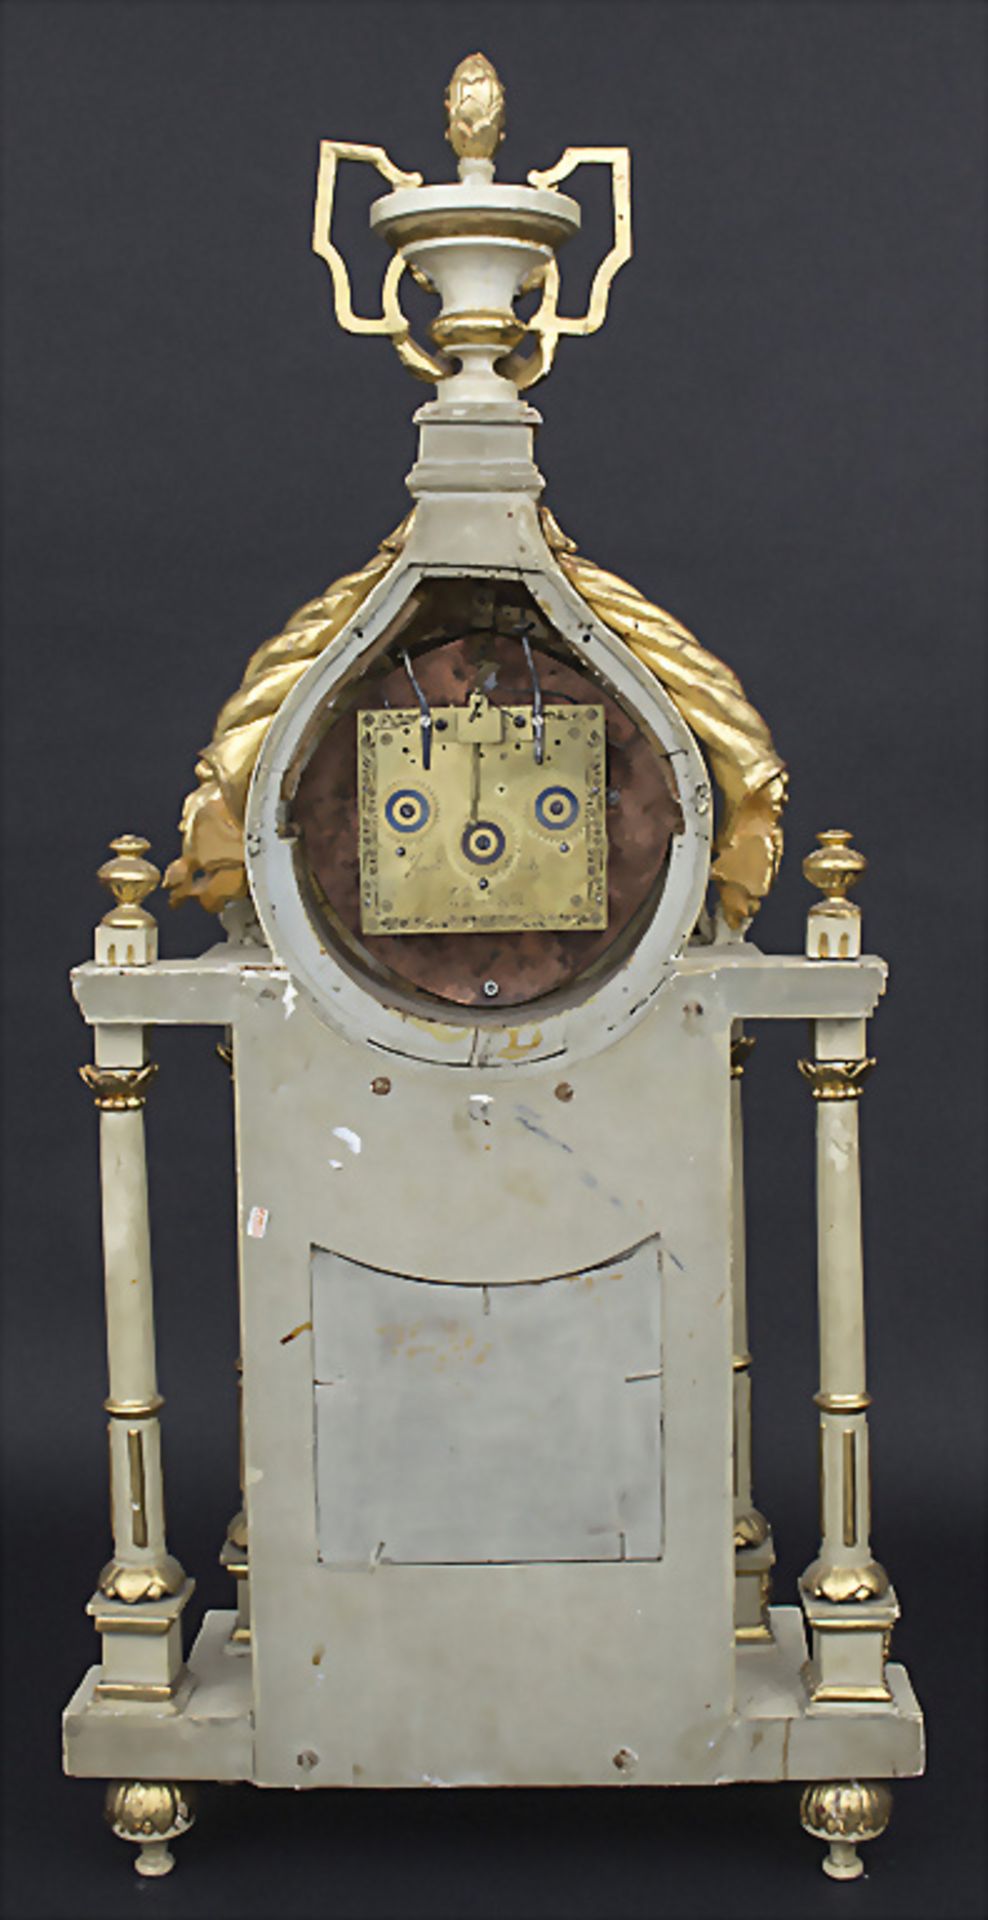 Louis-Seize-Kaminuhr / Louis-Seize mantle Clock, Jocob Scholz, Neumarkt, um 1775 - Image 3 of 4